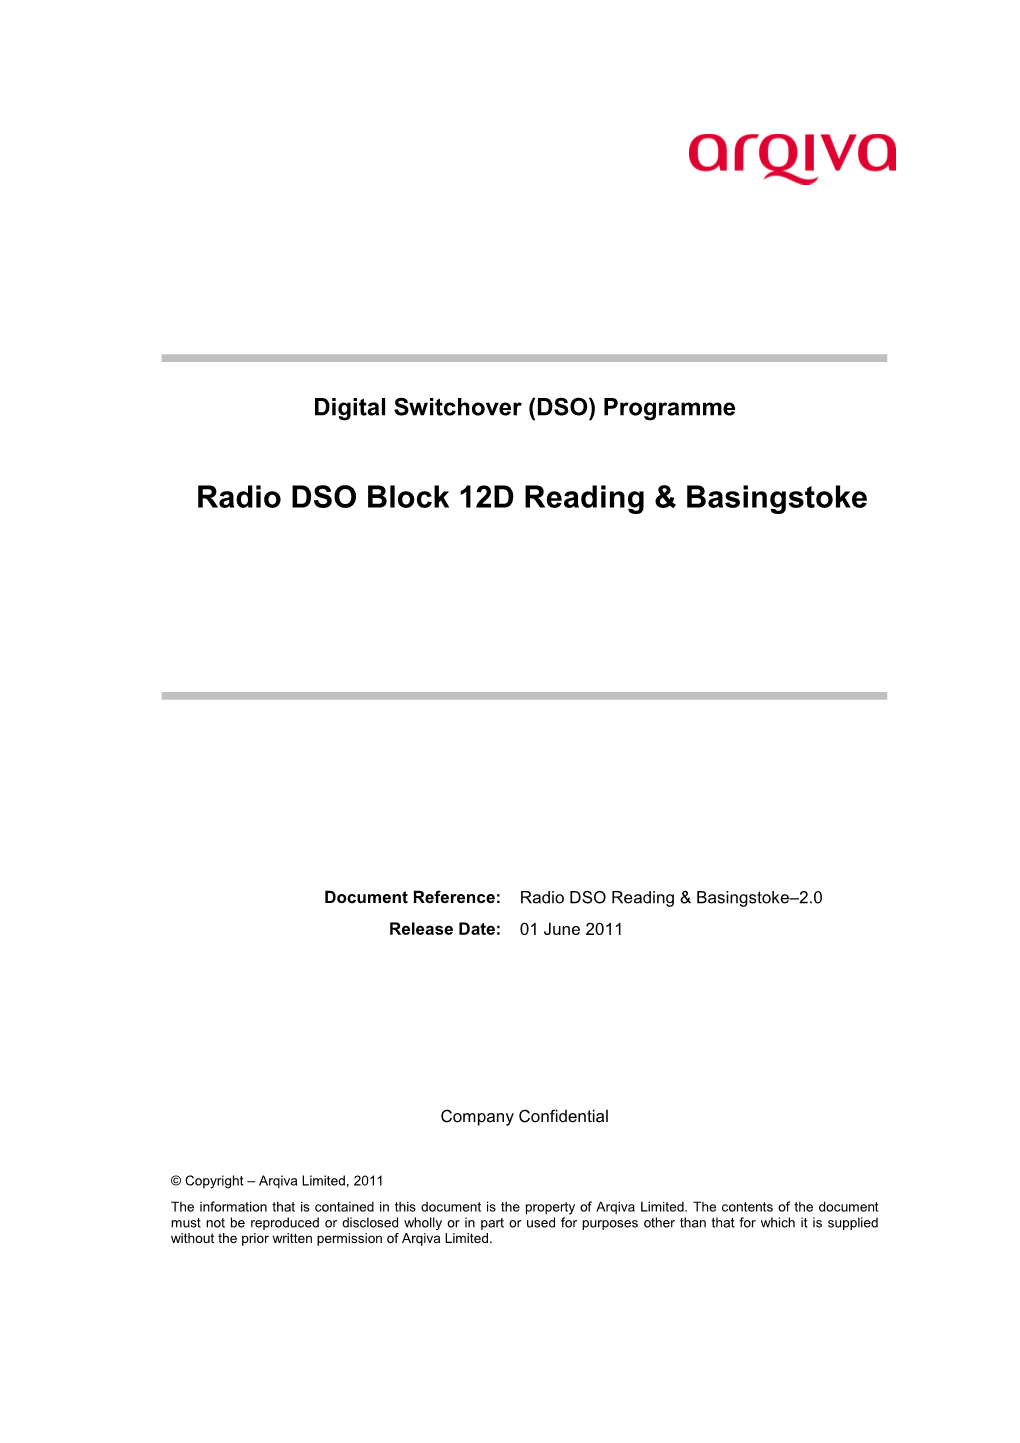 Digital Switchover Reading&Basingstoke 12D Reference Document V2